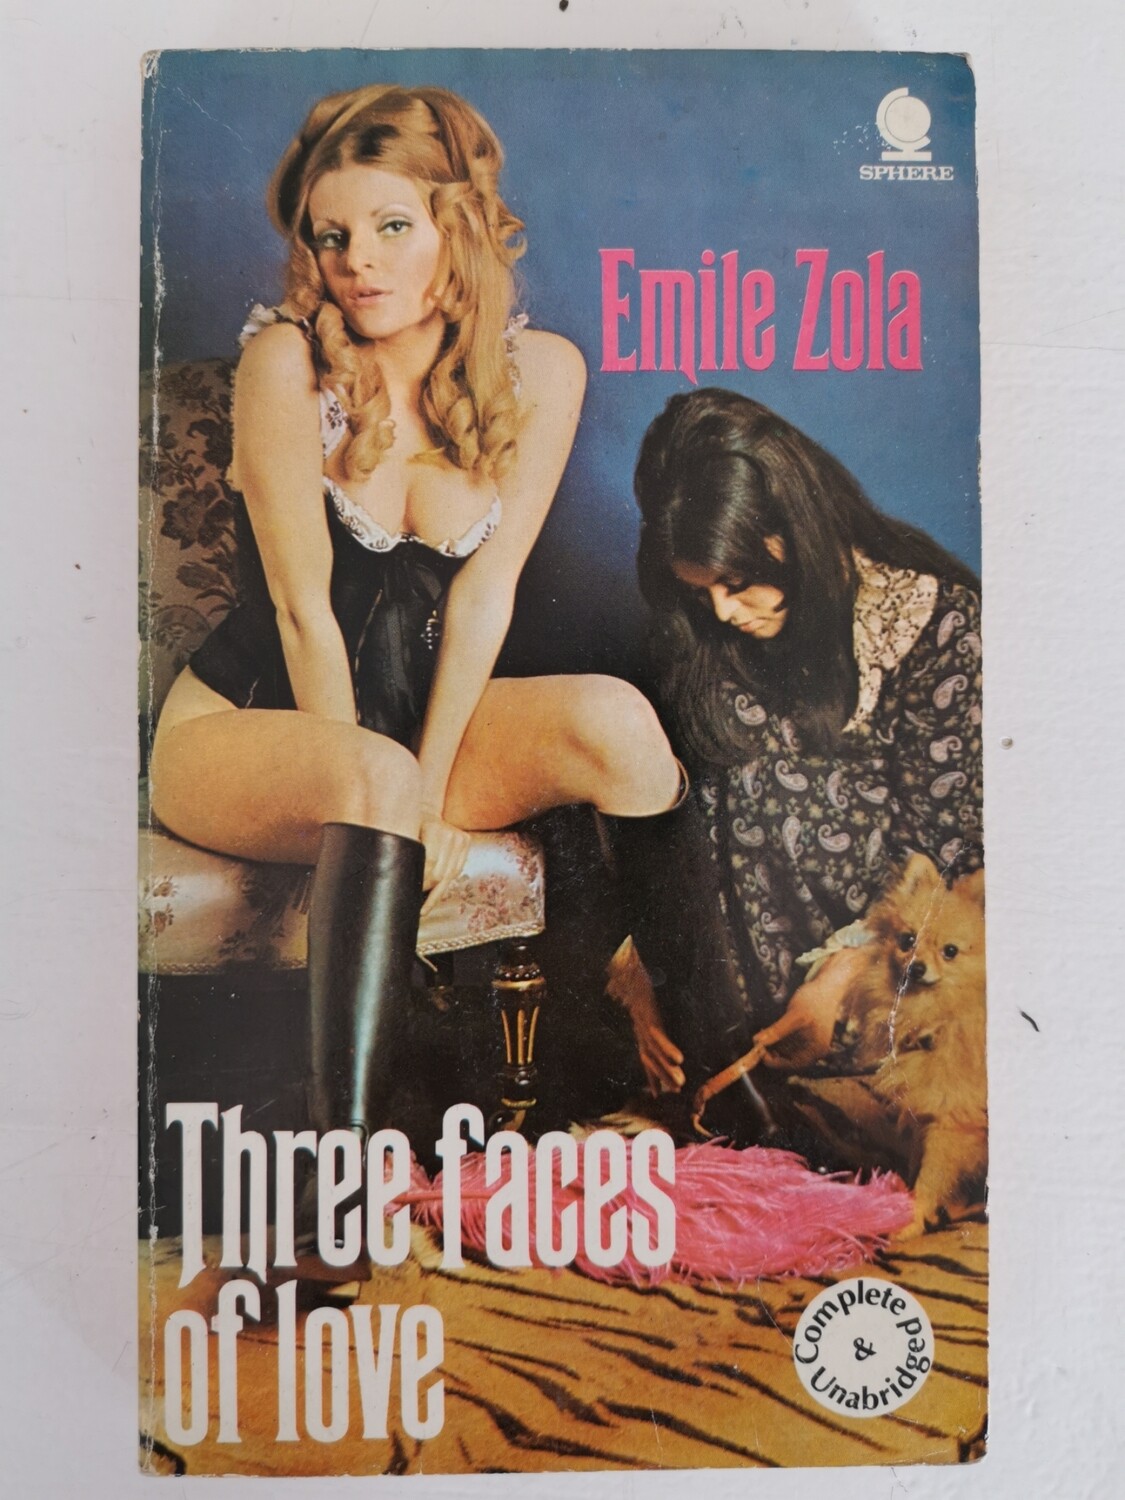 The three faces of love, Emile Zola